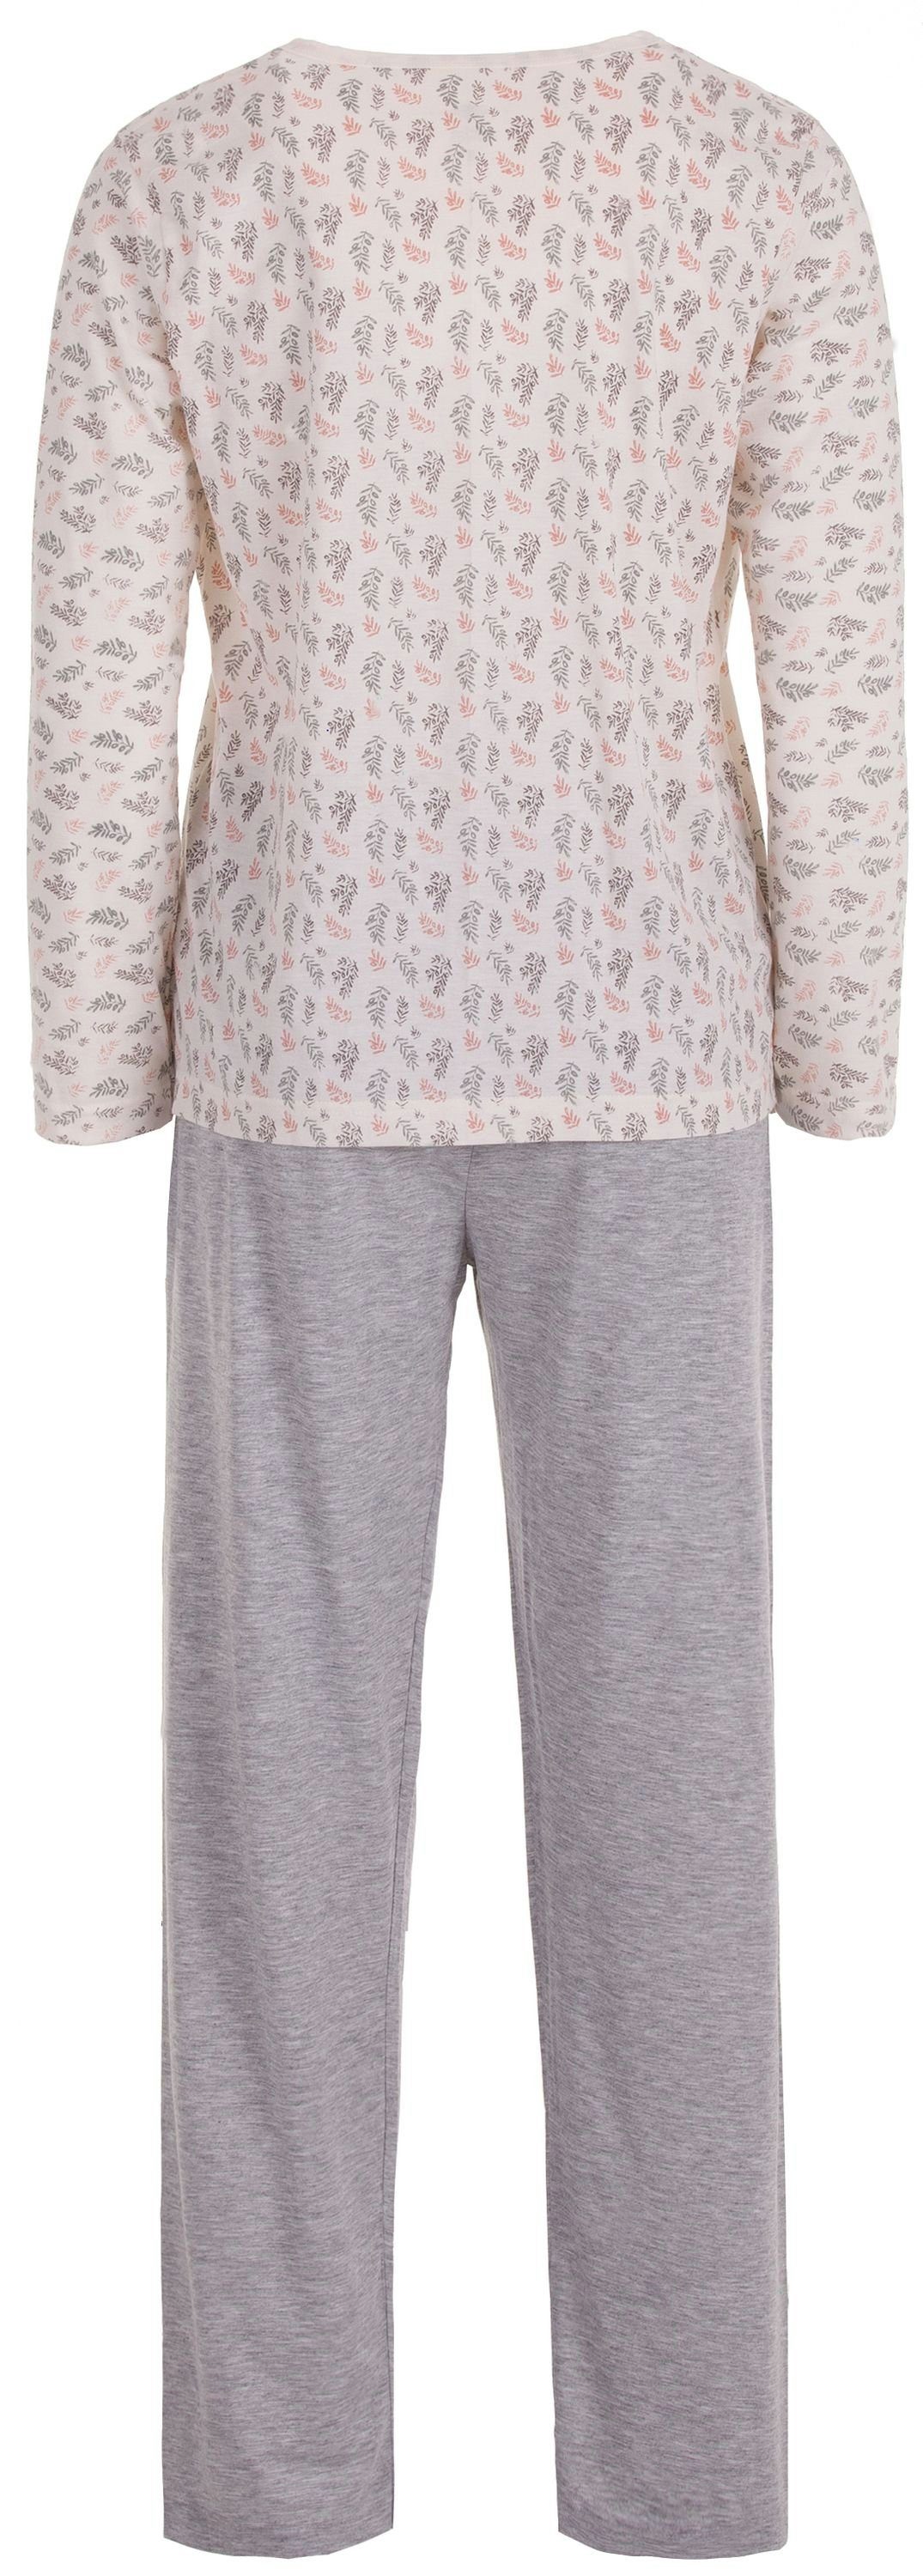 Langarm Set zeitlos Schlafanzug Zweige rosa - Pyjama